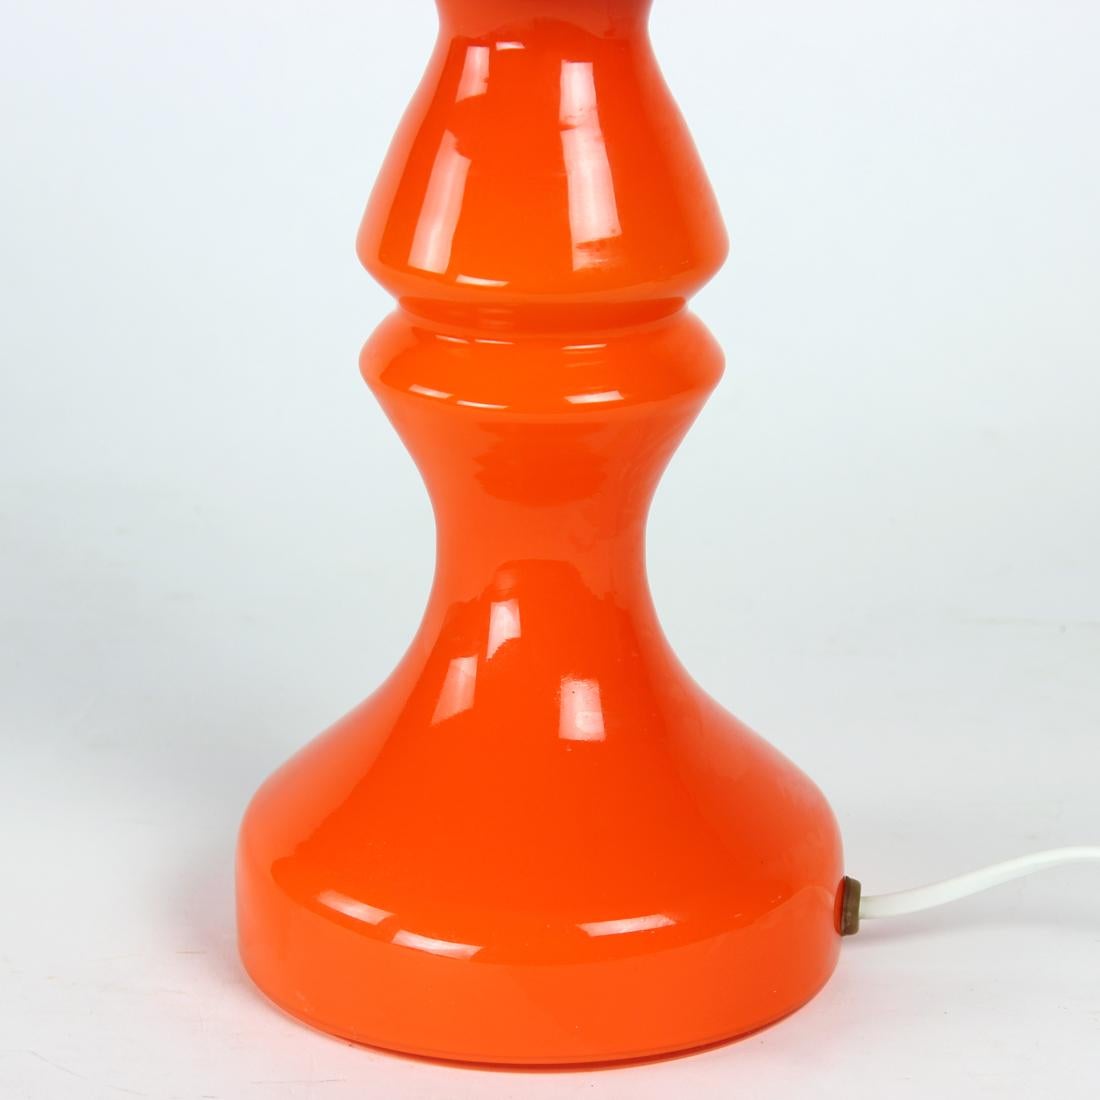 Polish Unique Orange Glass Table Lamp by Vitropol, Poland, 1960s For Sale